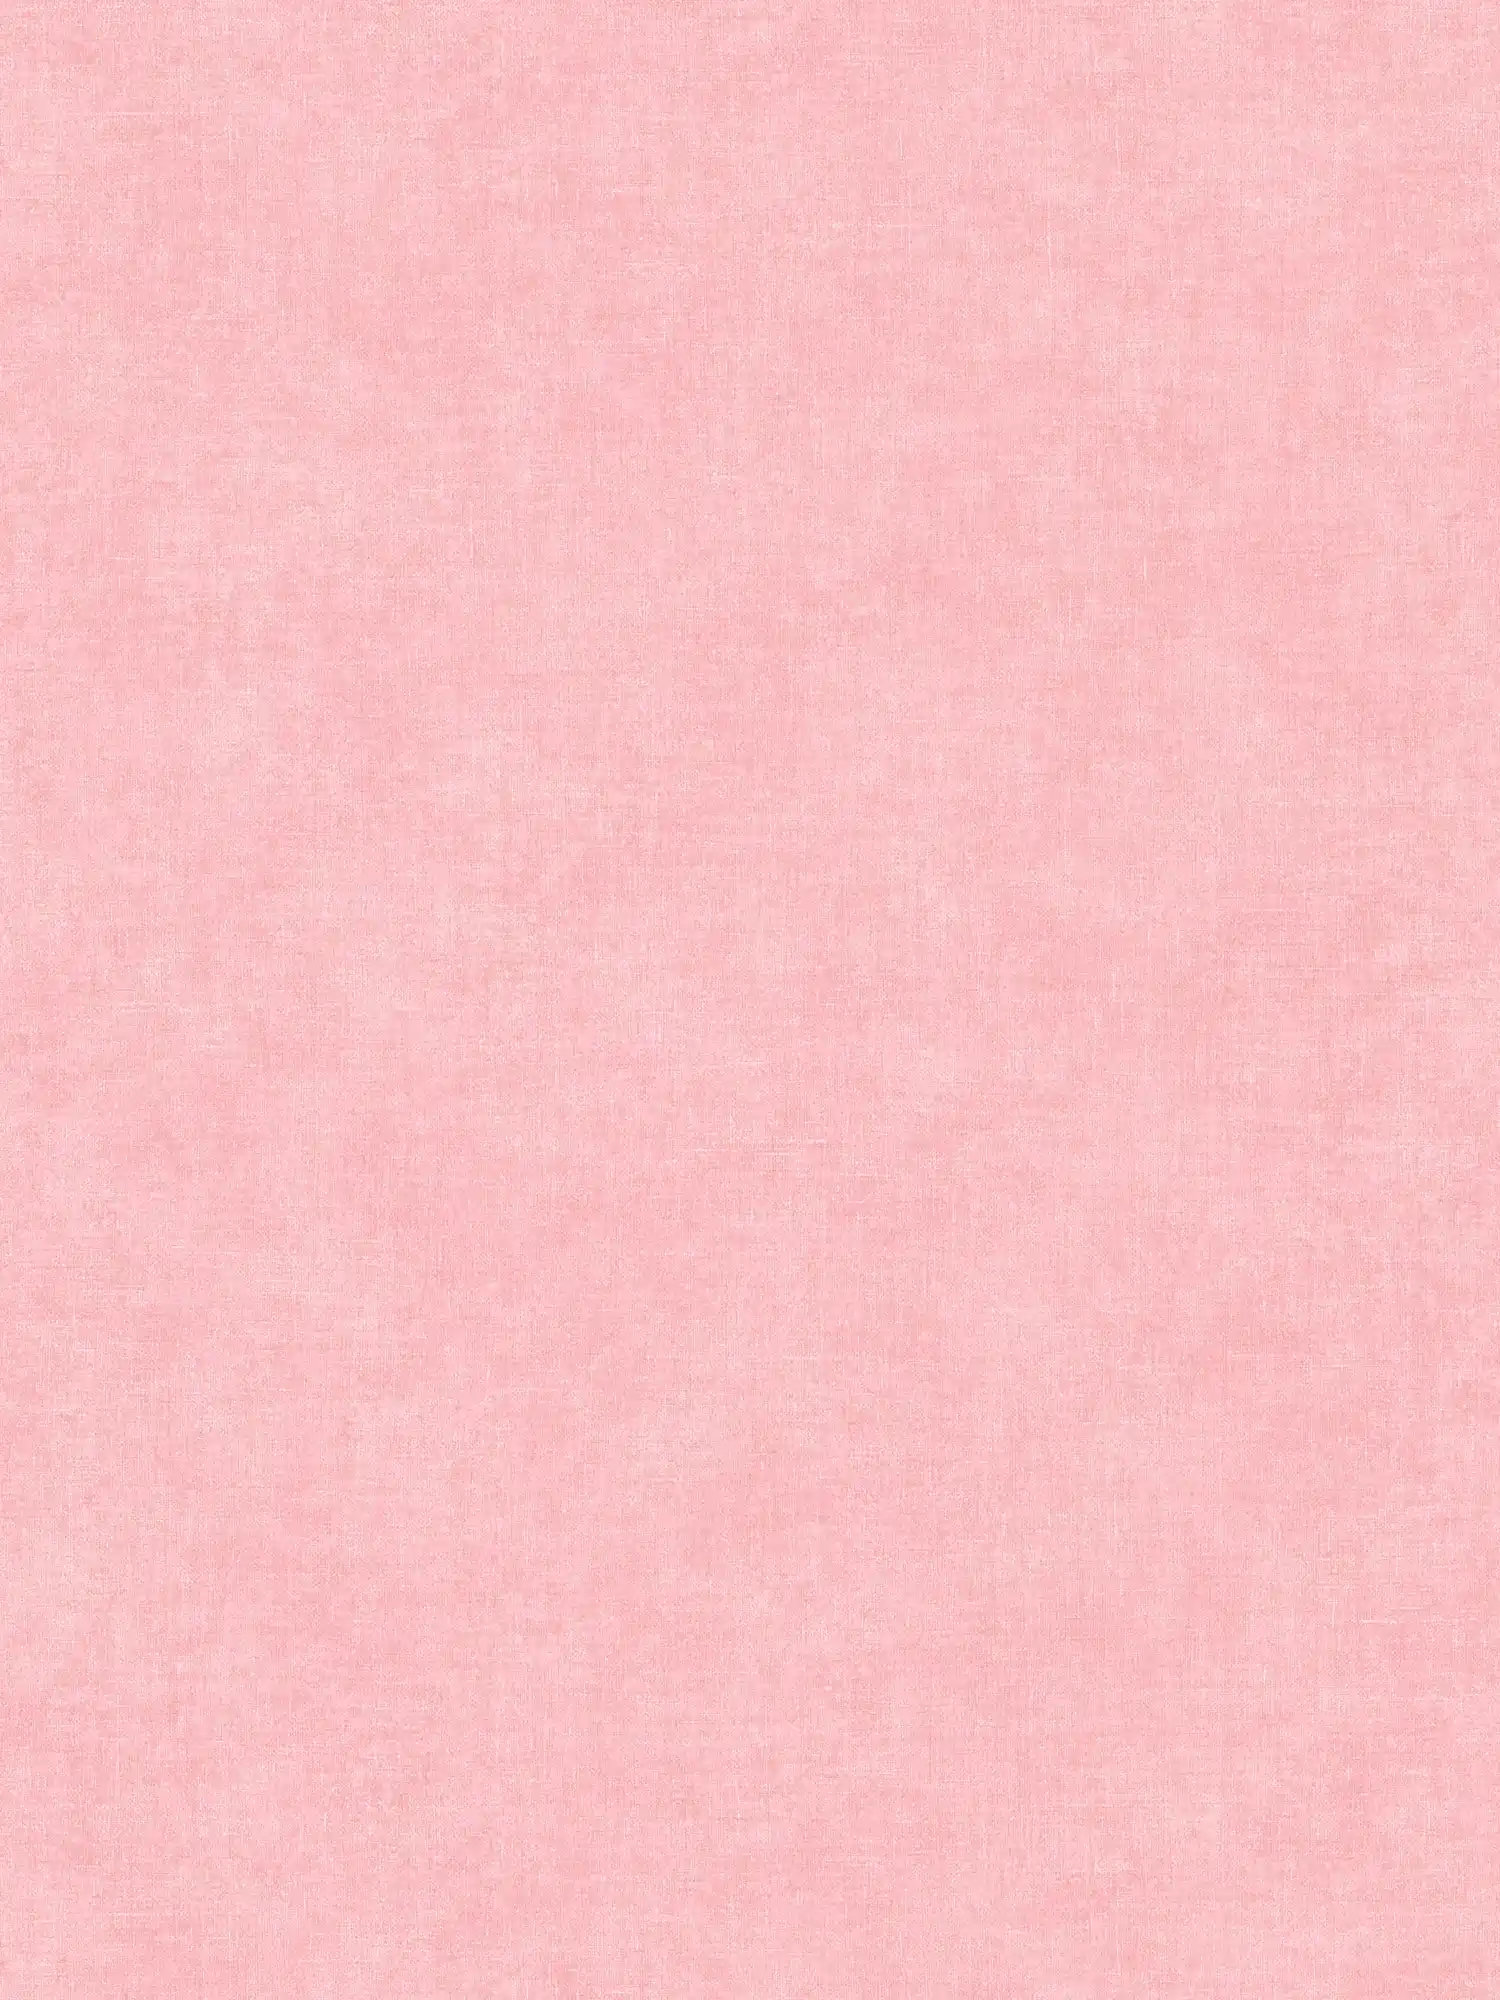 Papel pintado rosa liso y mate con textura
